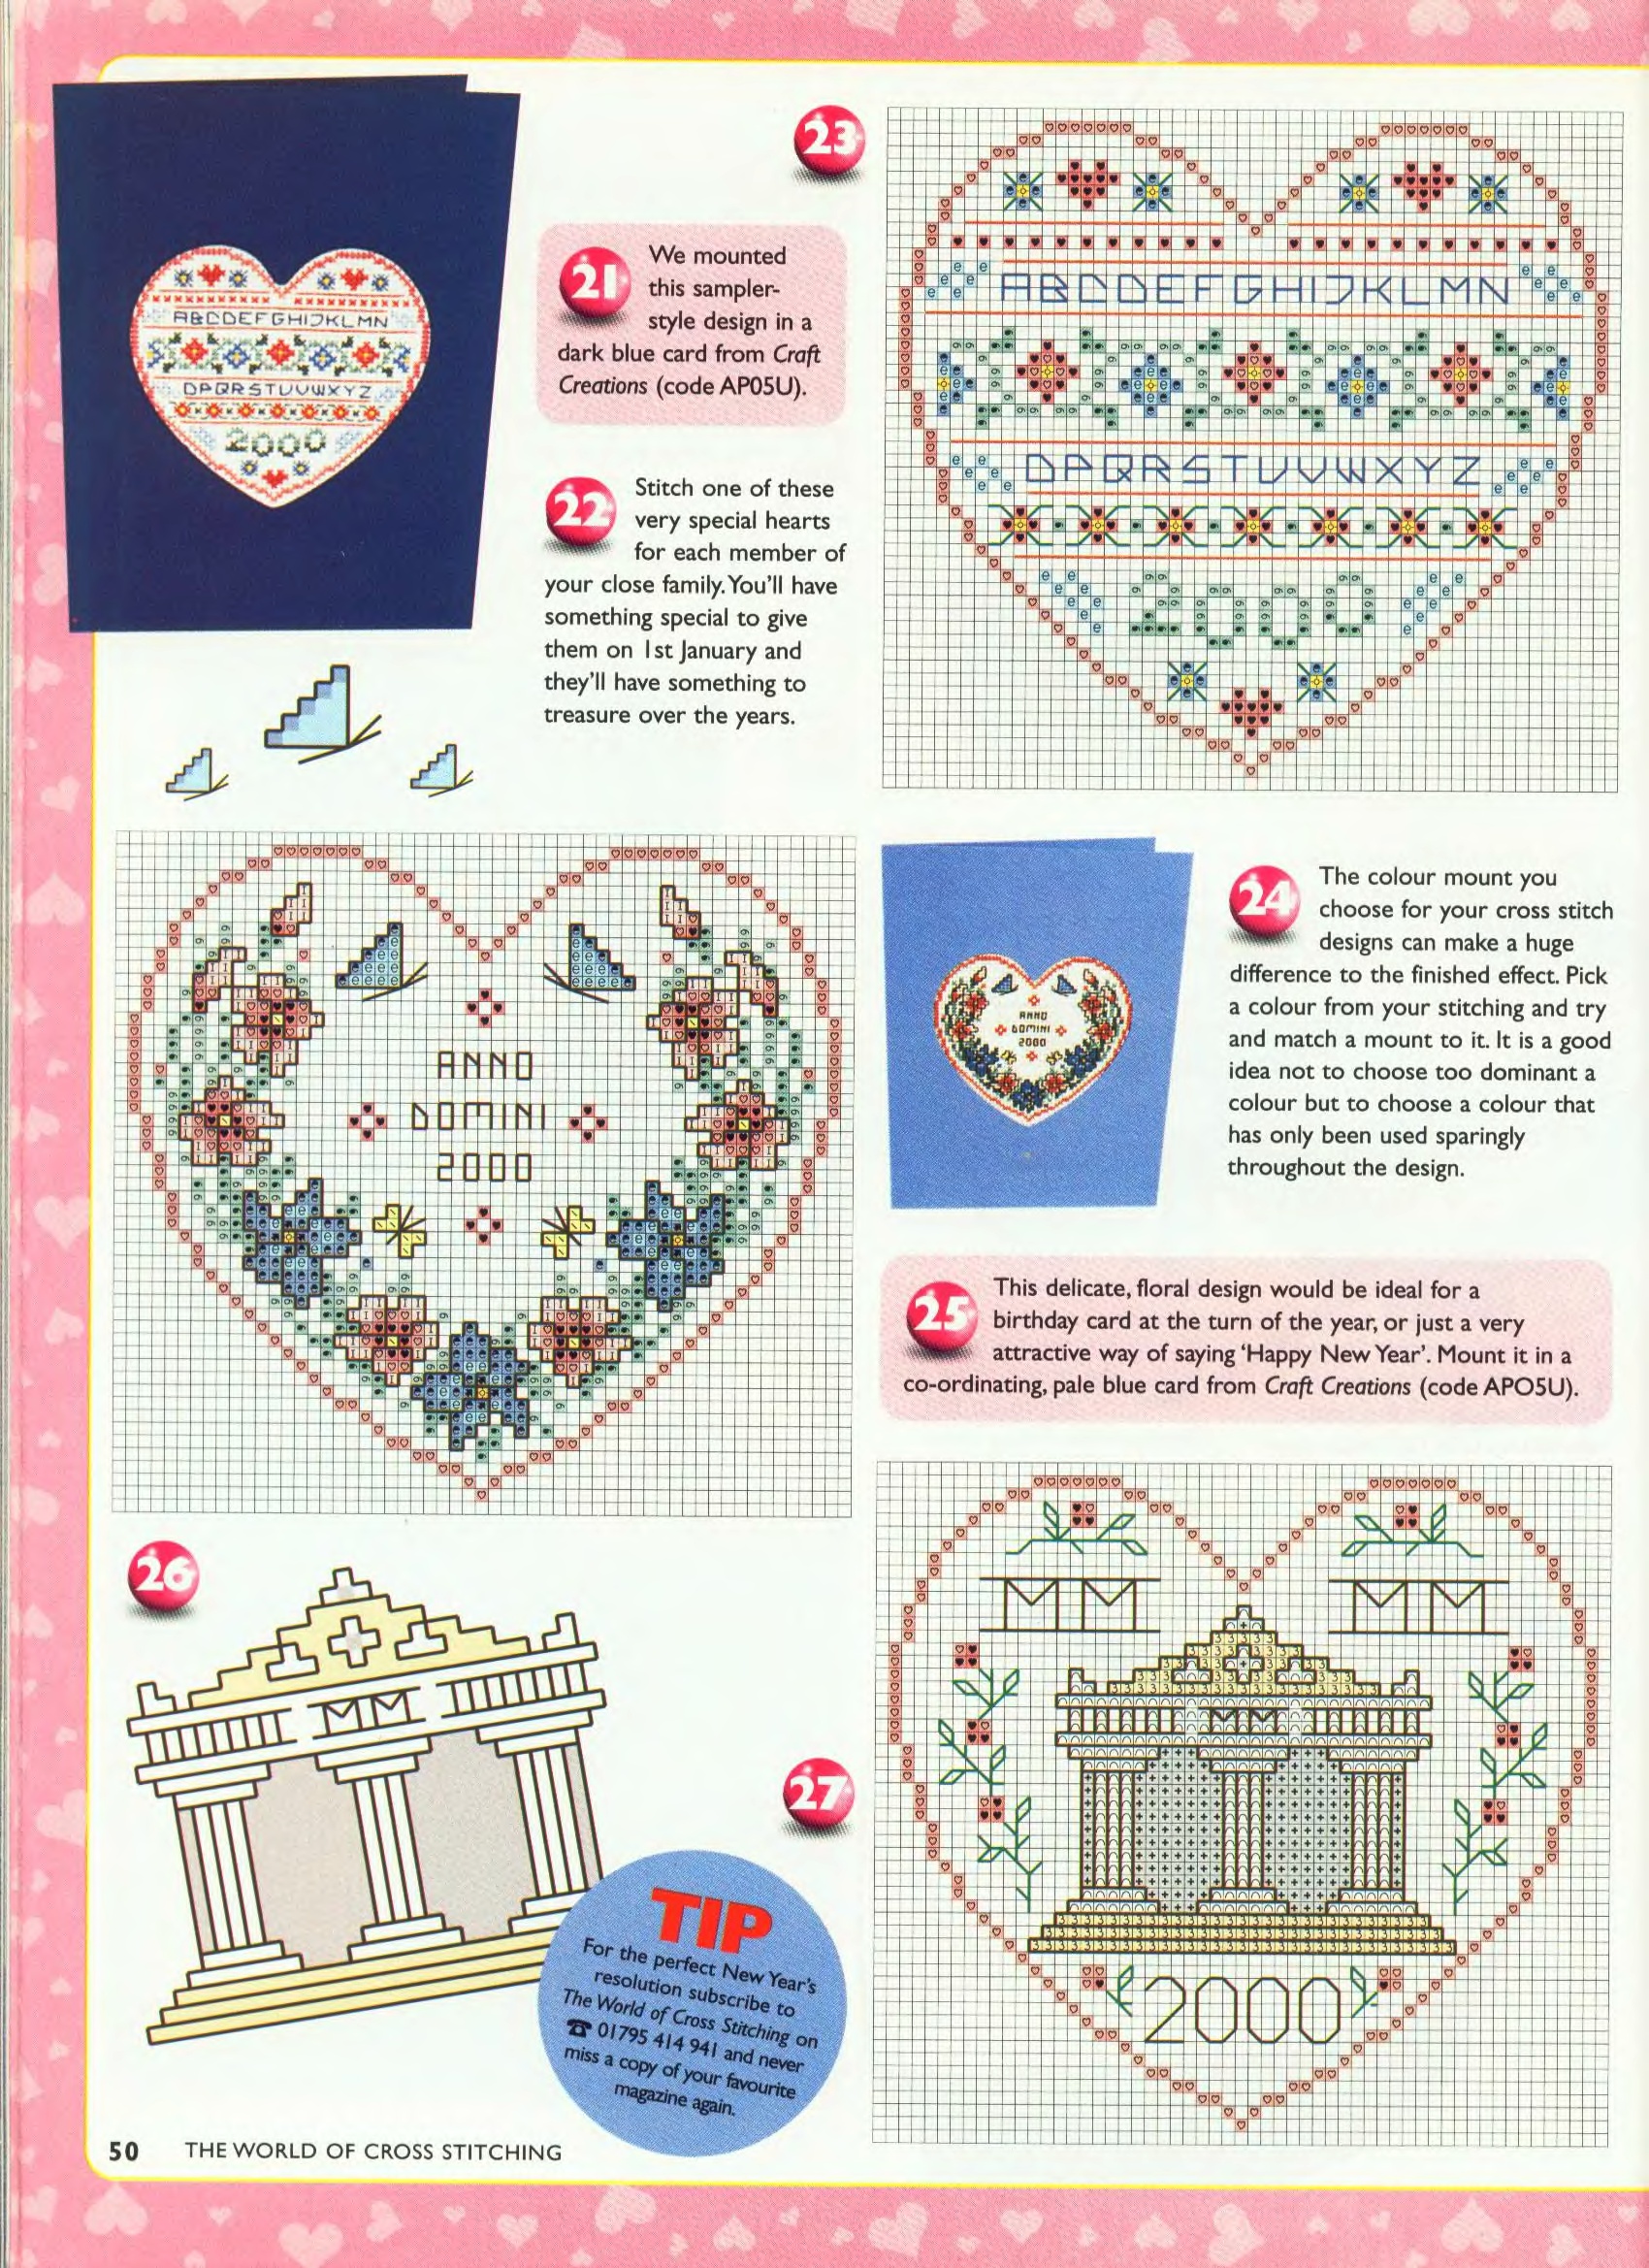 Millenium hearts ideas cross stitch pattern (5)